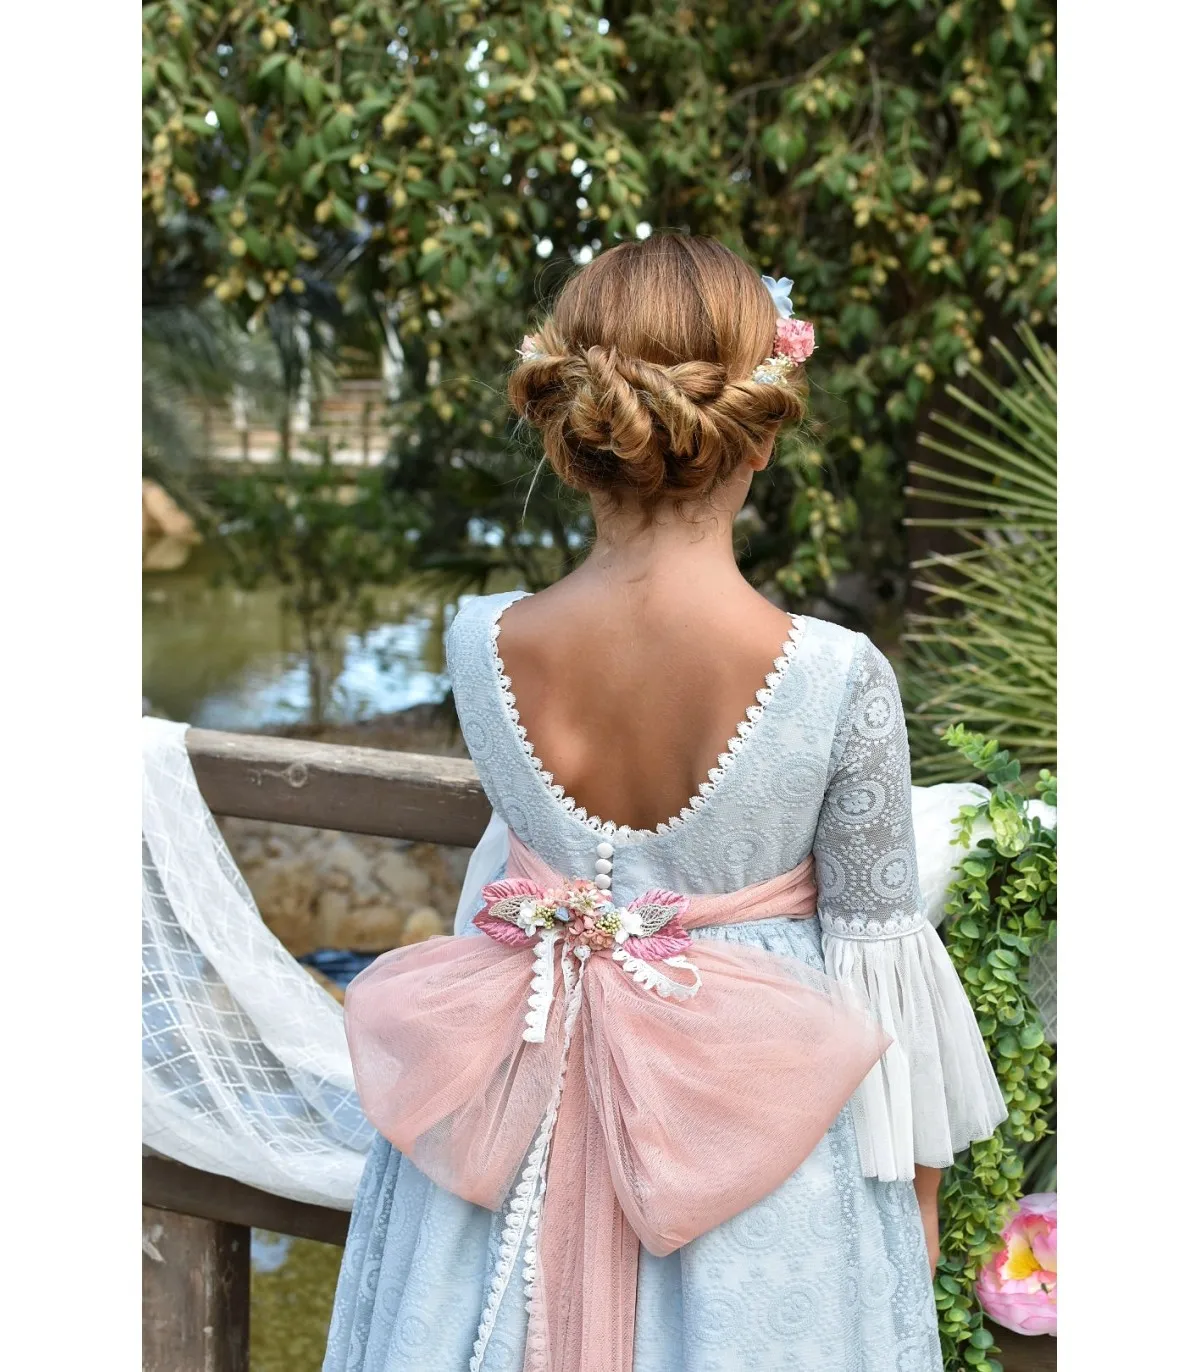 FATAPAESE-vestido de encaje Floral para niña, vestido de princesa Vintage, cinturón de cinta Floral, vestido de tul para dama de honor, fiesta de boda